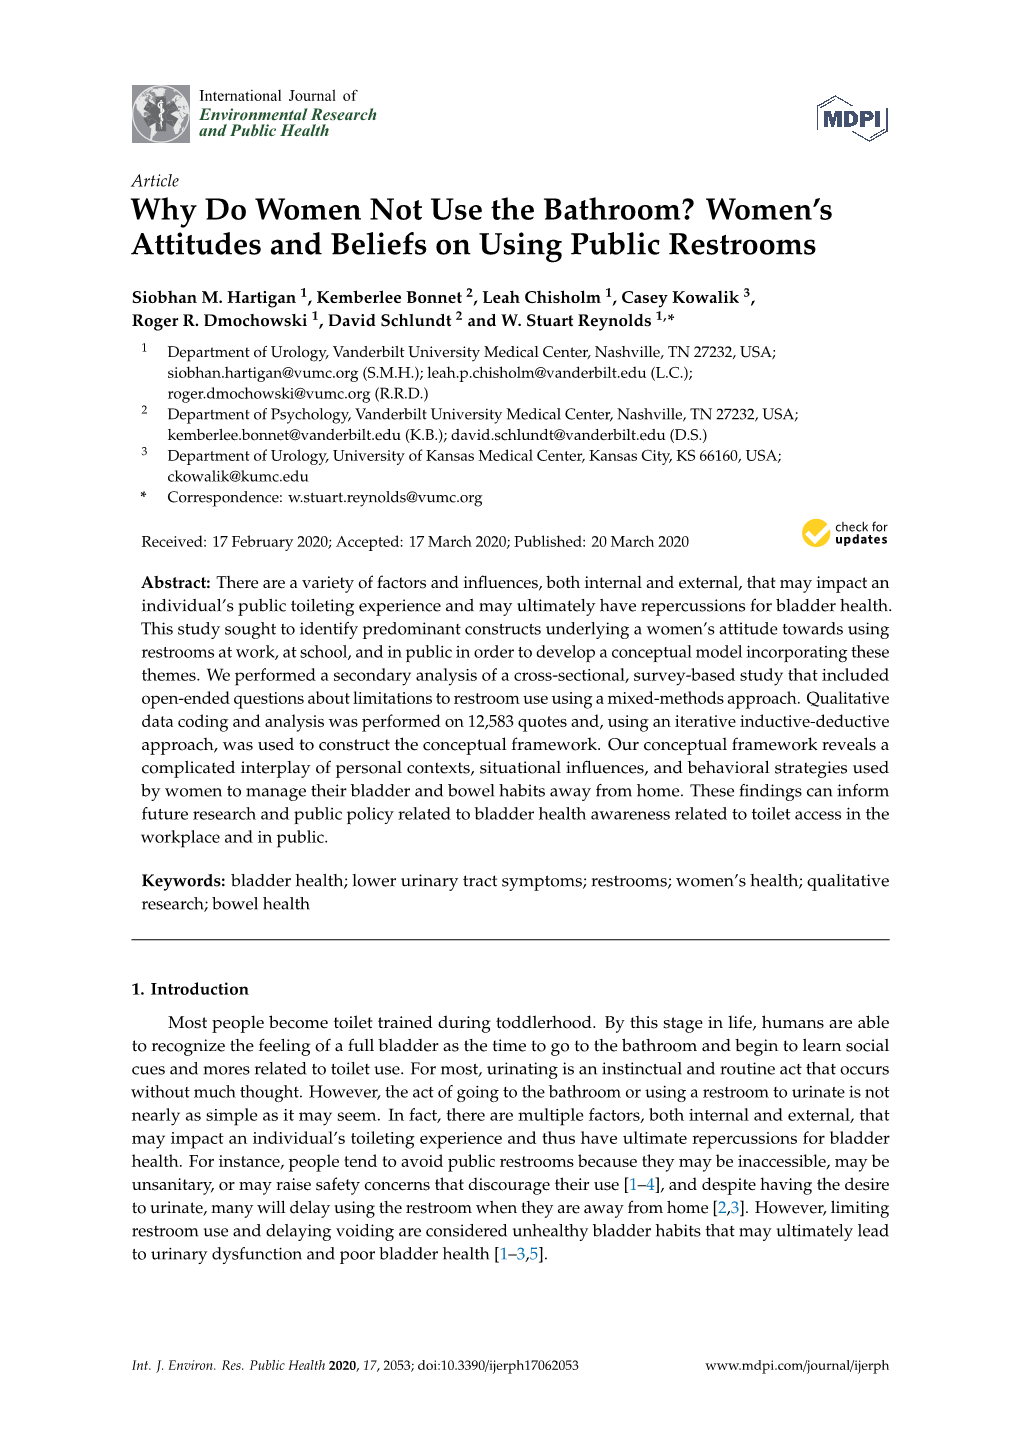 Women's Attitudes and Beliefs on Using Public Restrooms